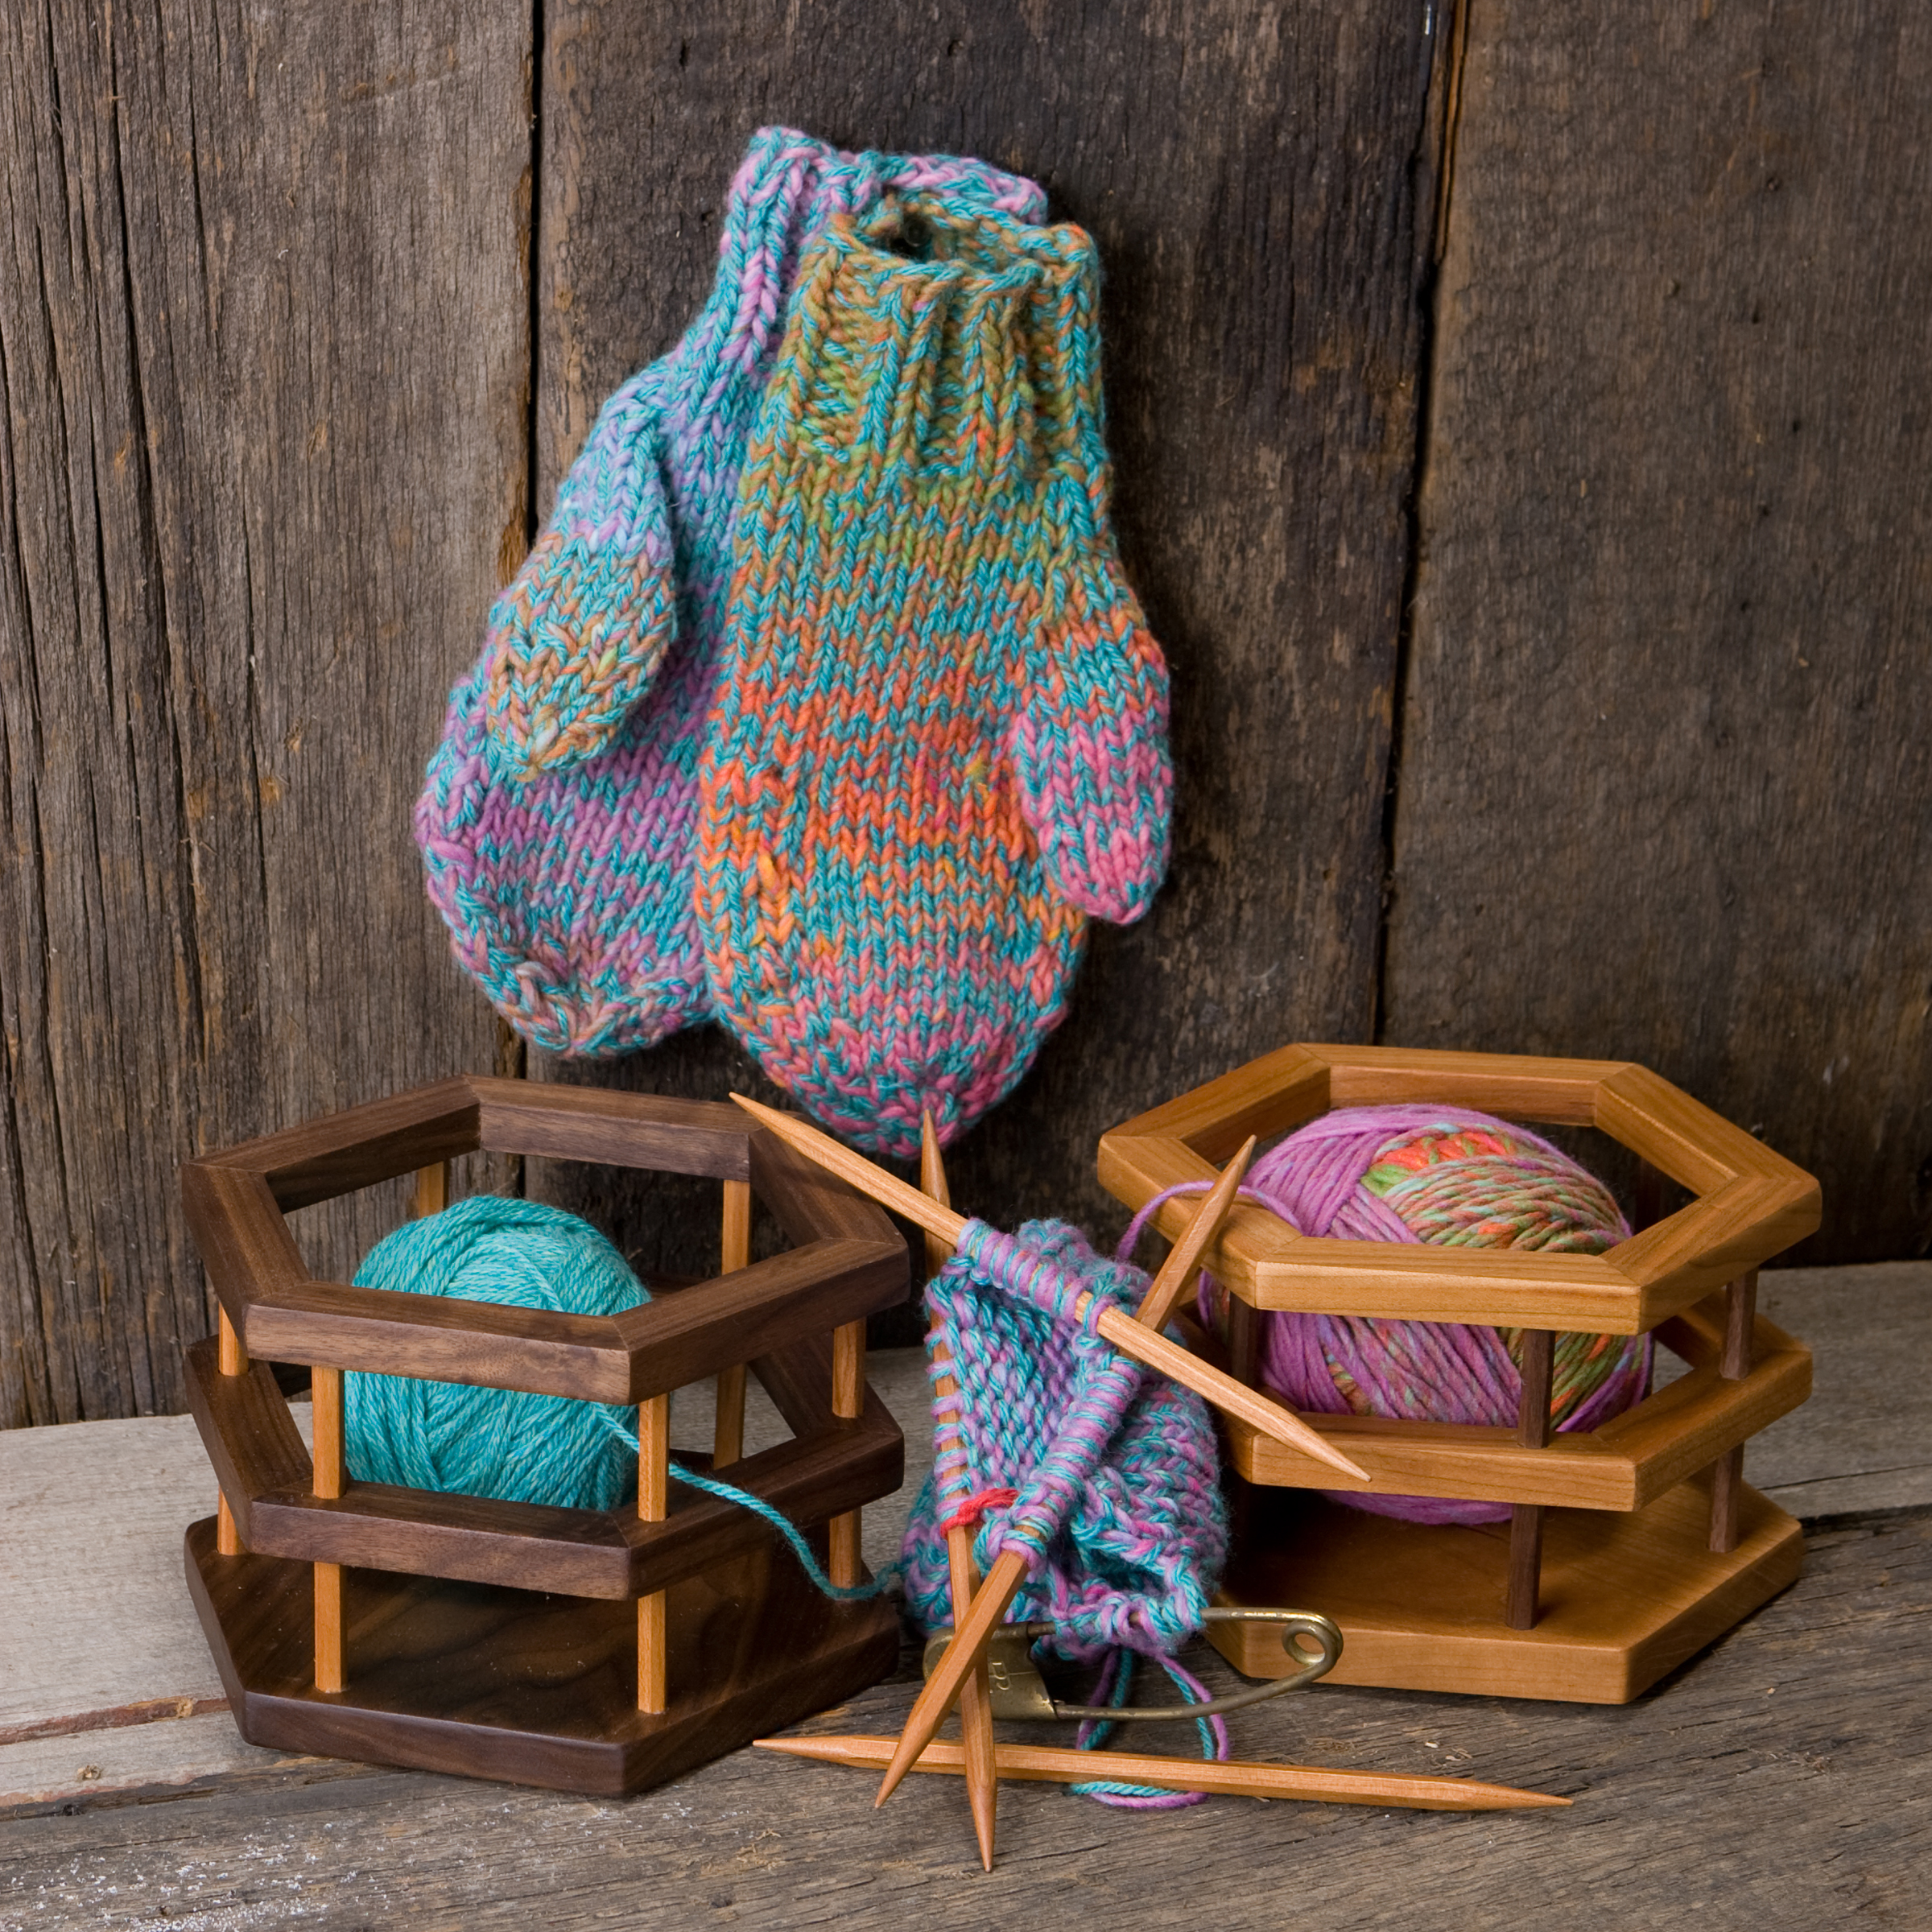  OBANGONG Wooden Yarn Bowl Holder,Round Knitting Yarn